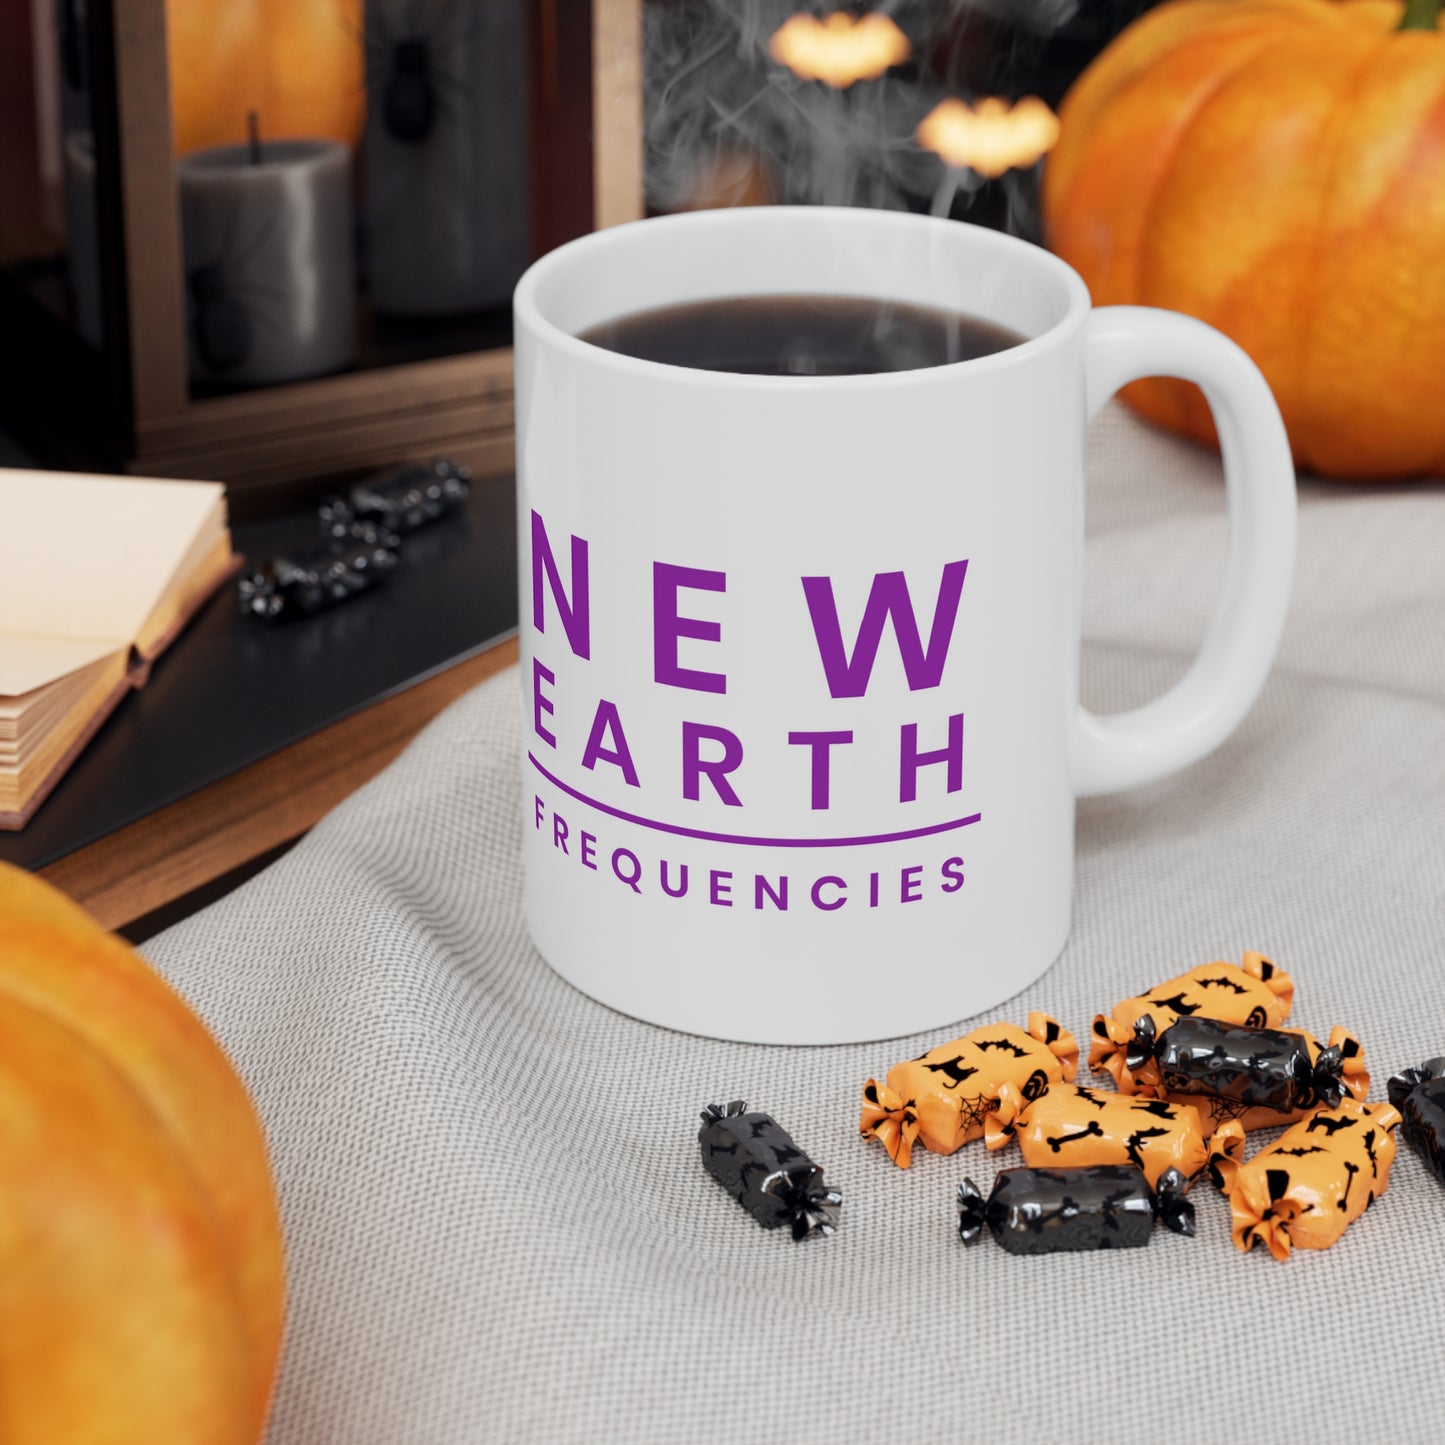 The Great Awakening - New Earth Frequencies - High Vibe Coffee Mug